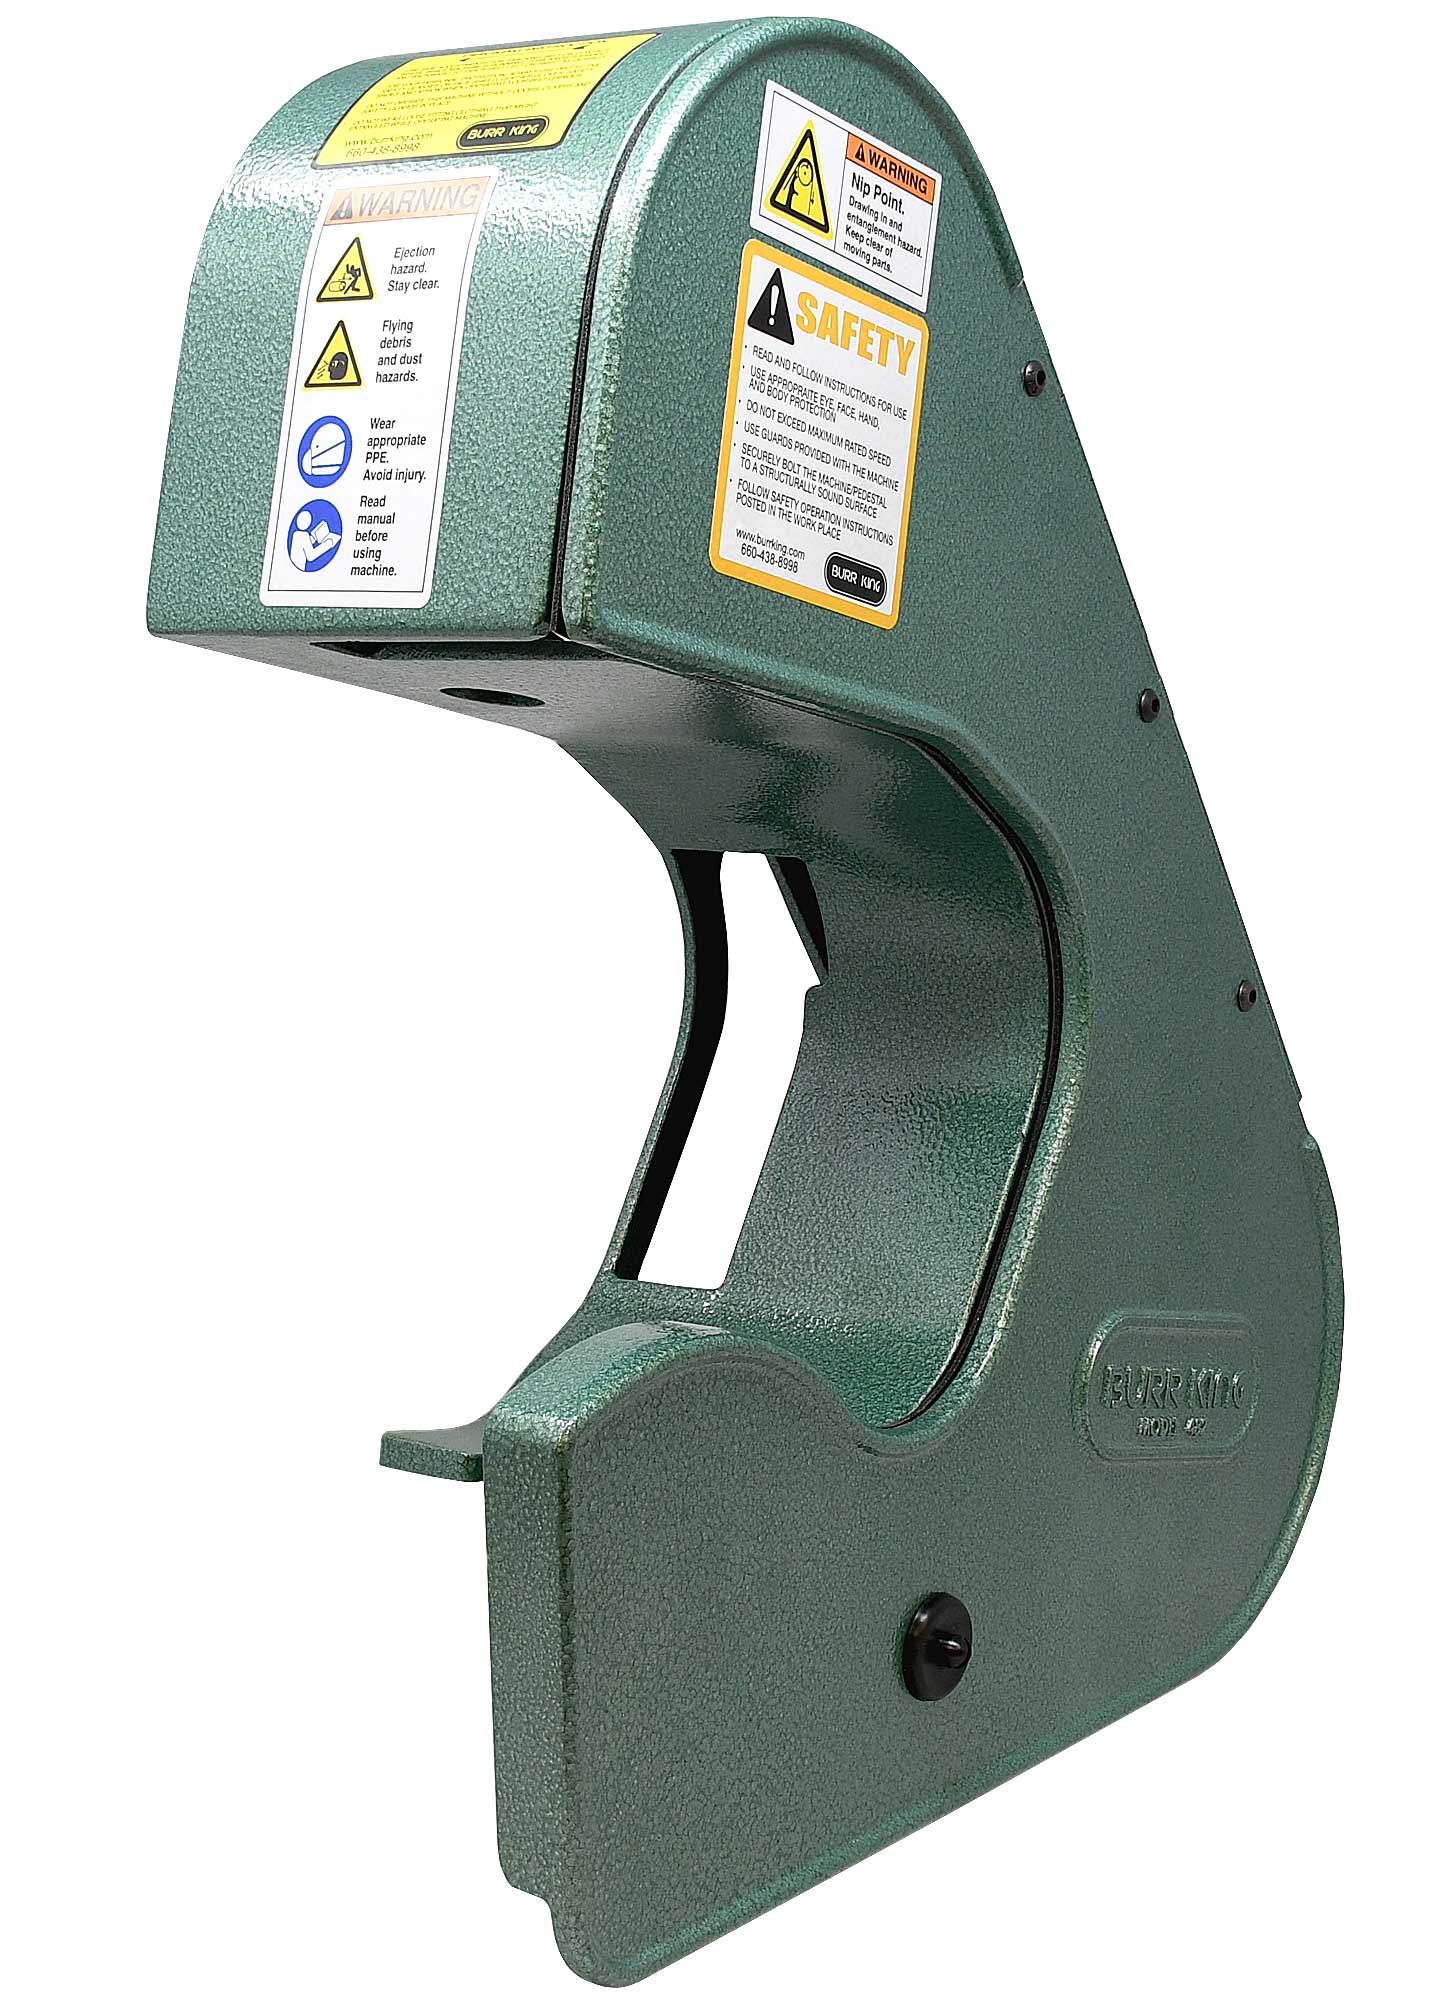 442-2 Guard and Door for Burr King Model 482 belt grinder, new design for machines manufactured after May 2021